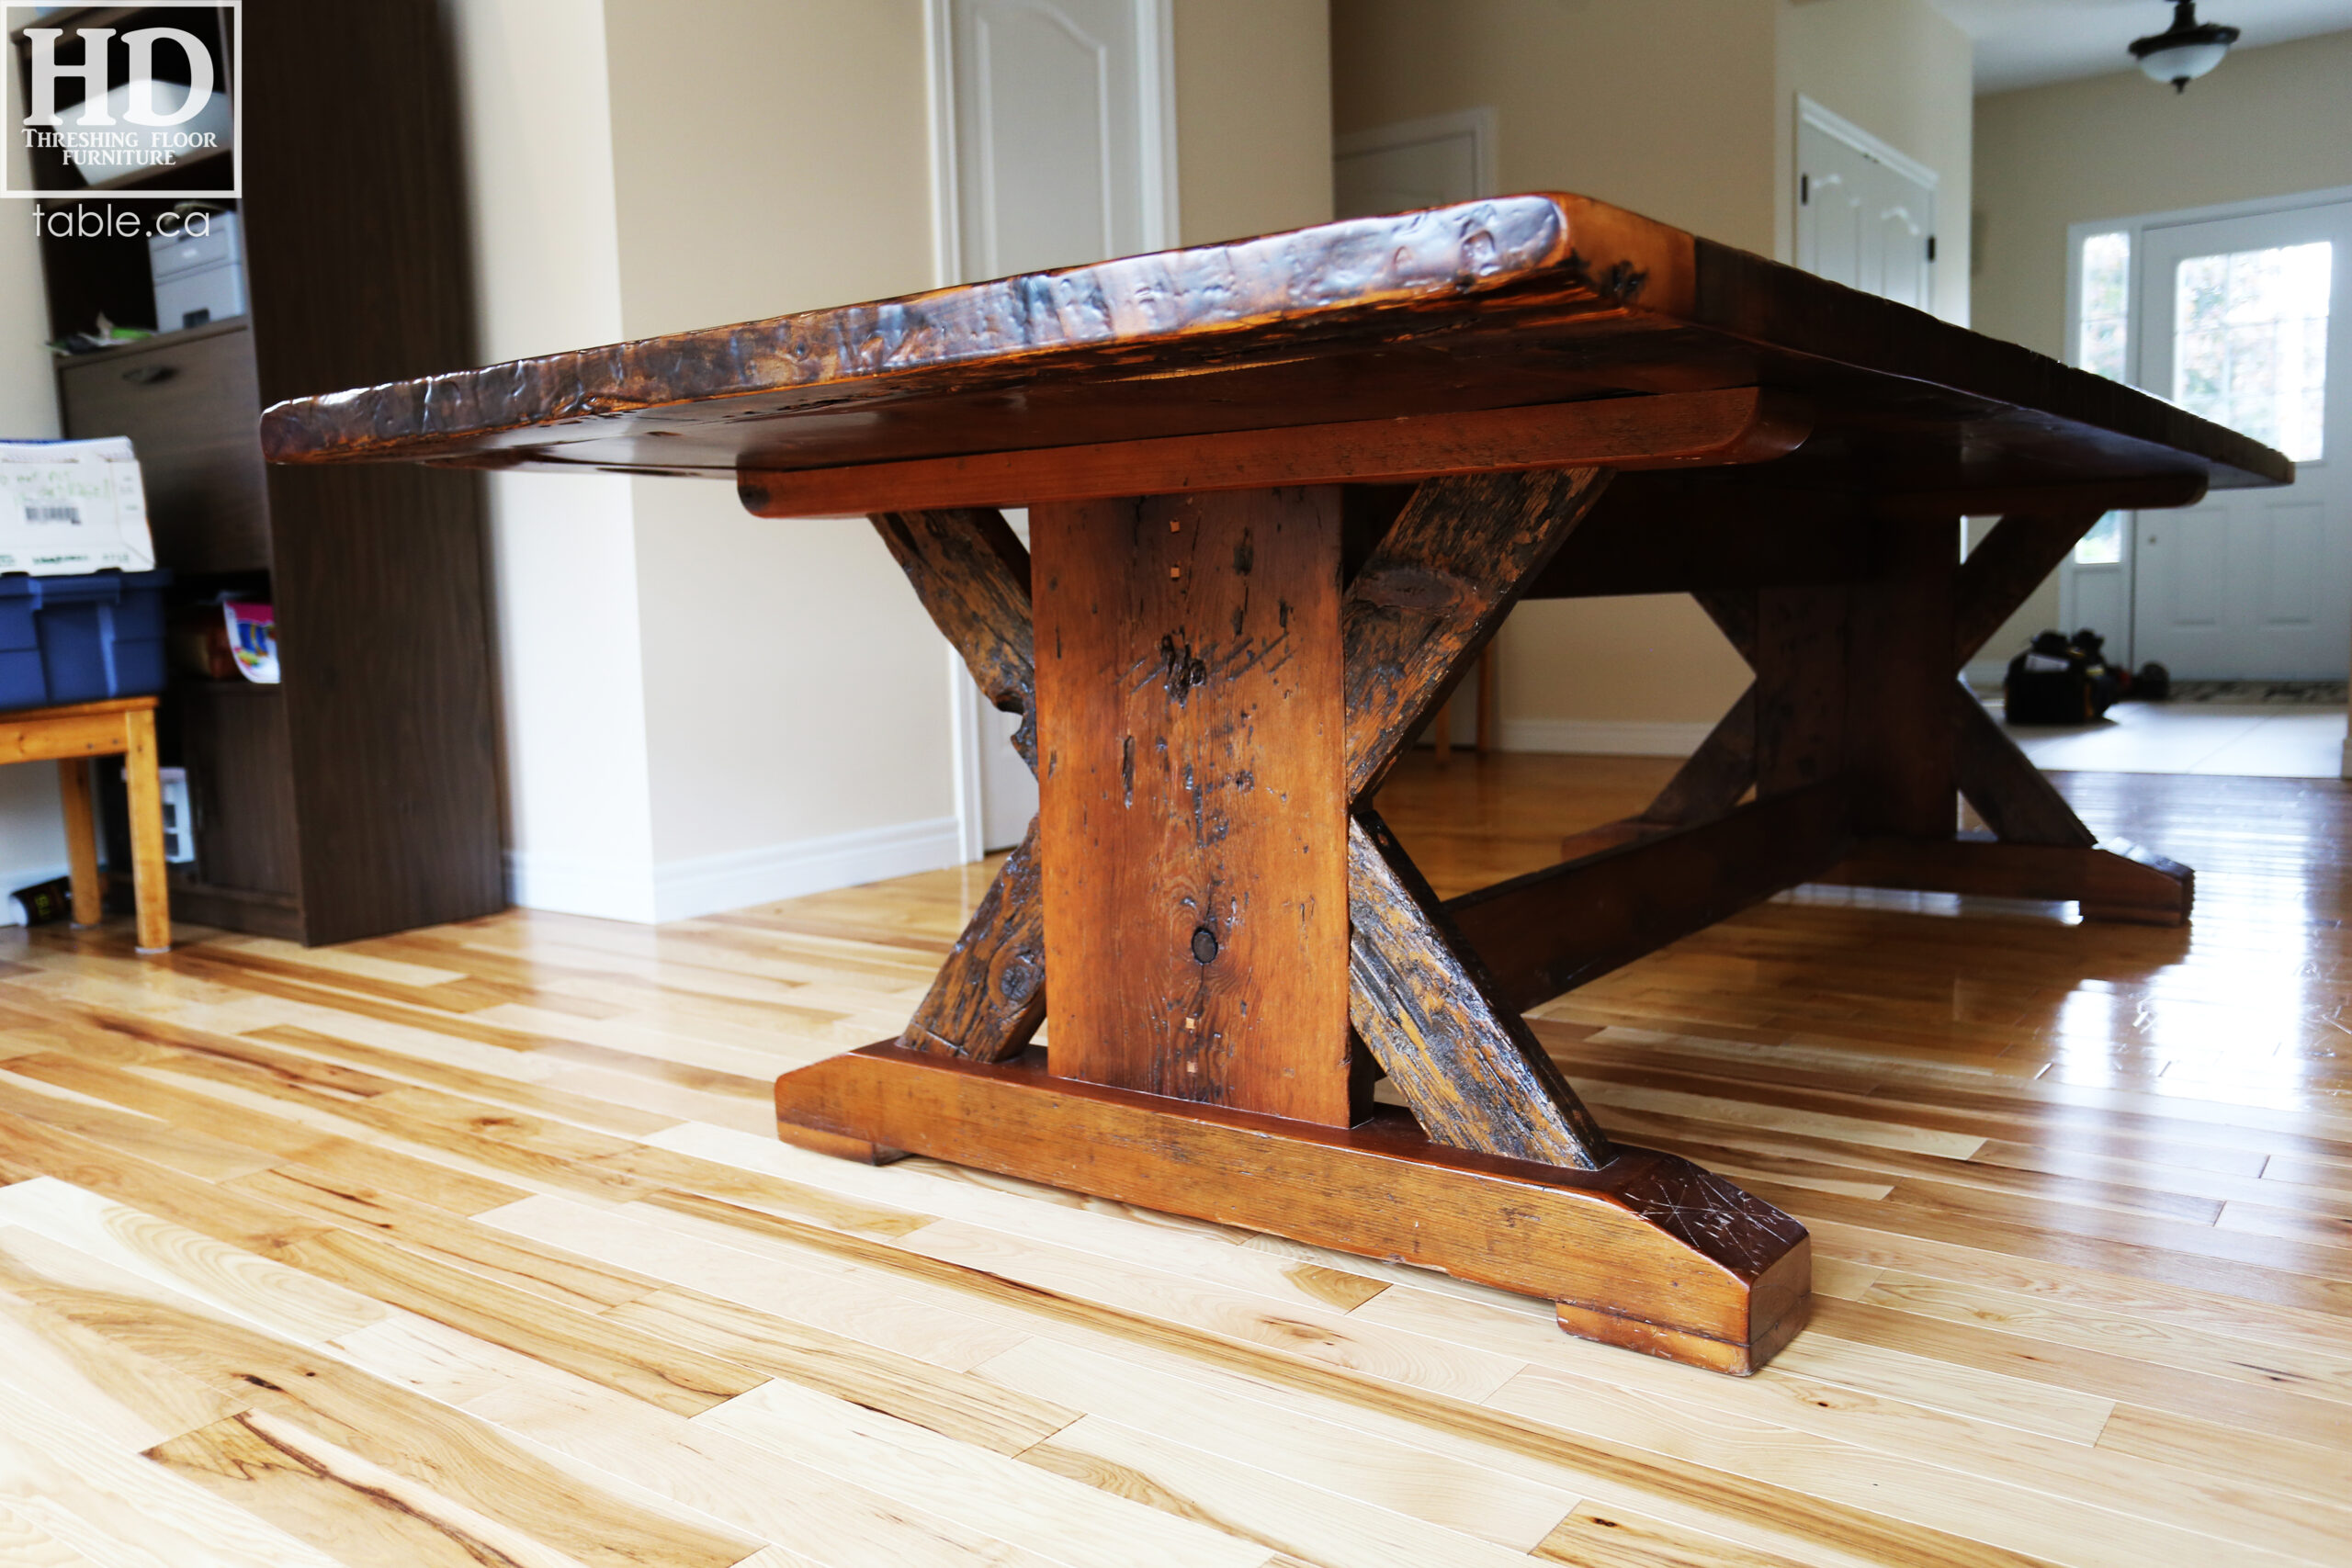 Rustic Table by HD Threshing Floor Furniture / www.table.ca